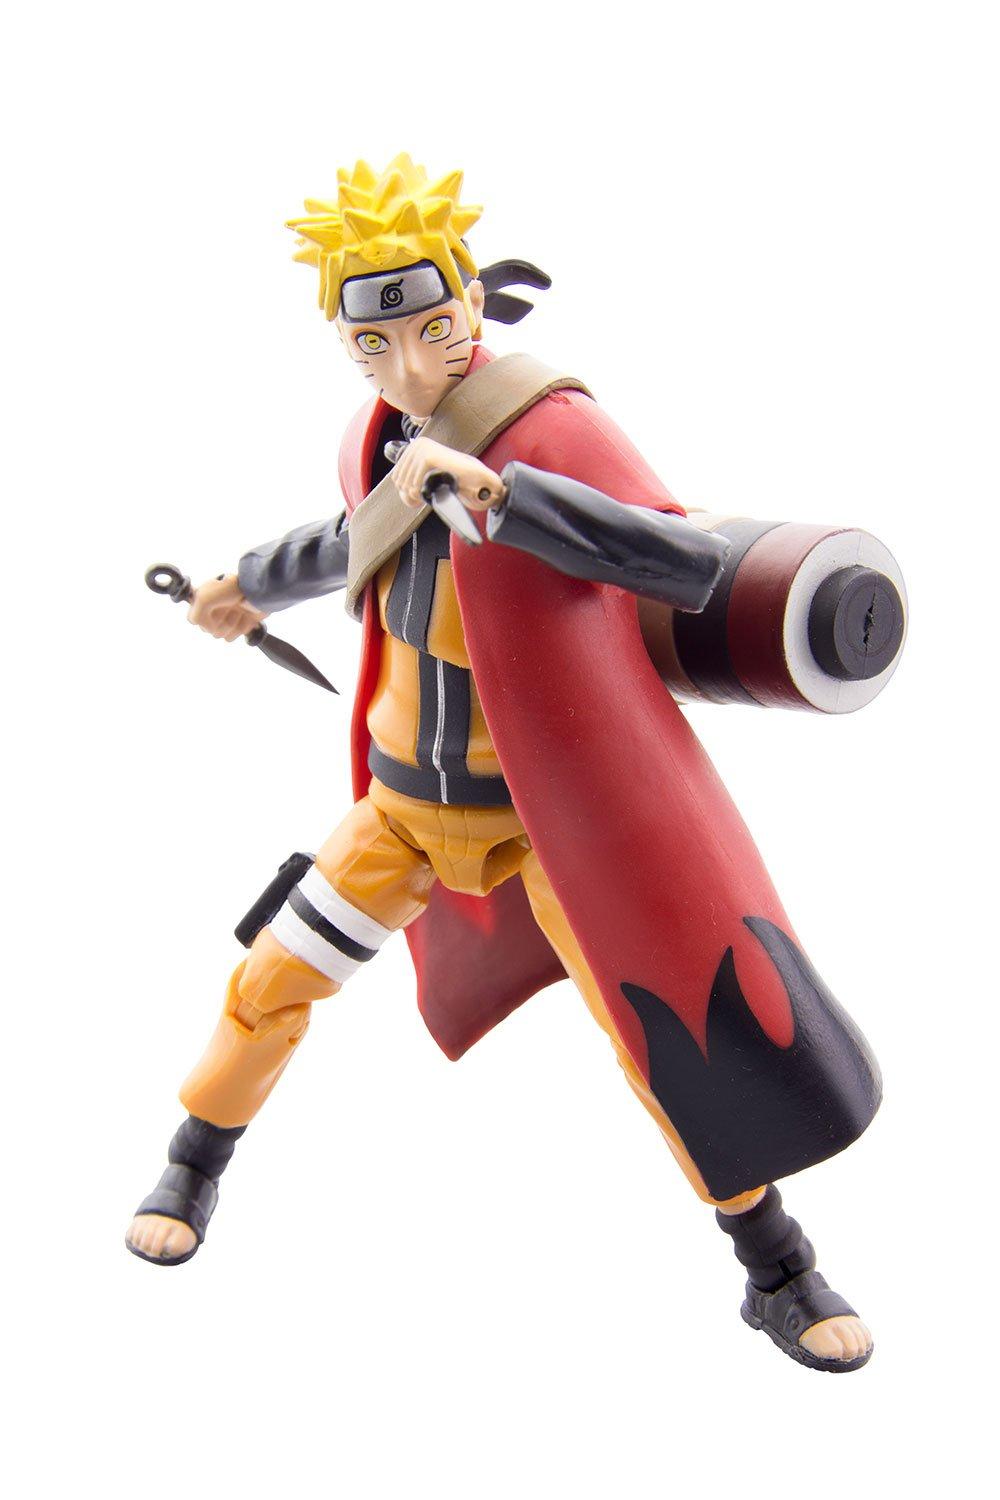 Naruto Shippuden Naruto Sage Mode Action Figure Only At Gamestop Gamestop - roblox script naruto